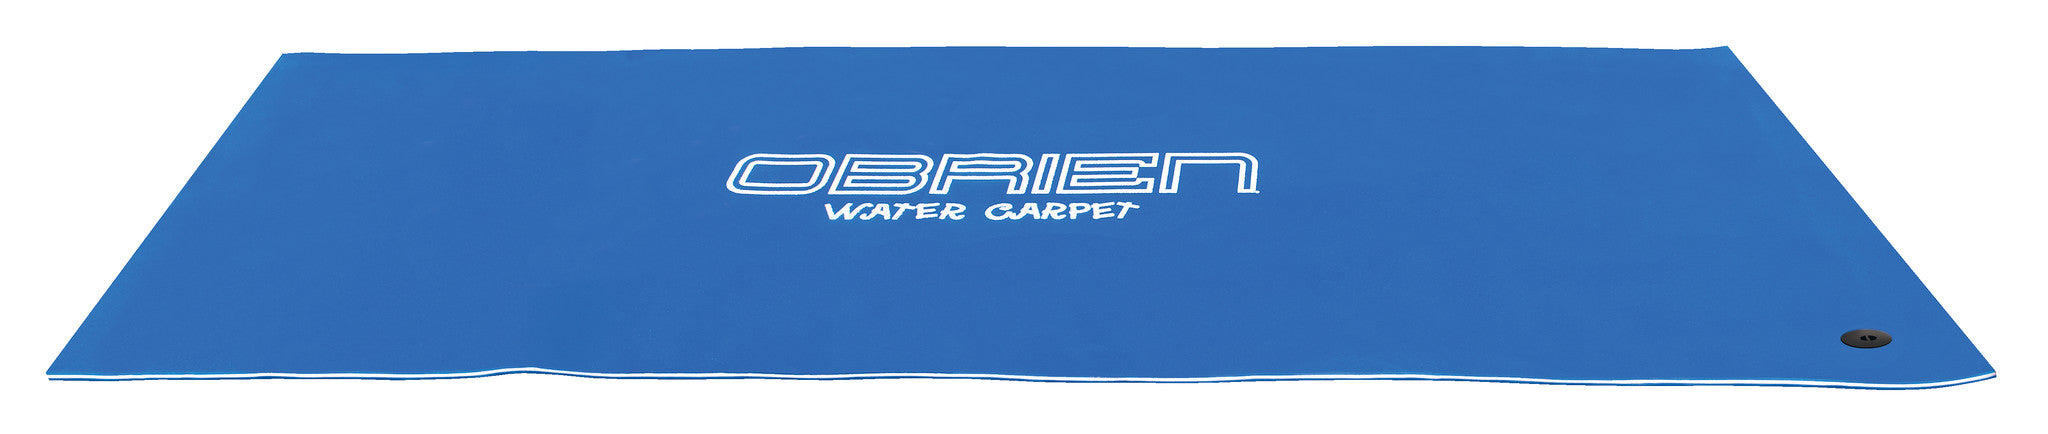 O'Brien Water Carpet